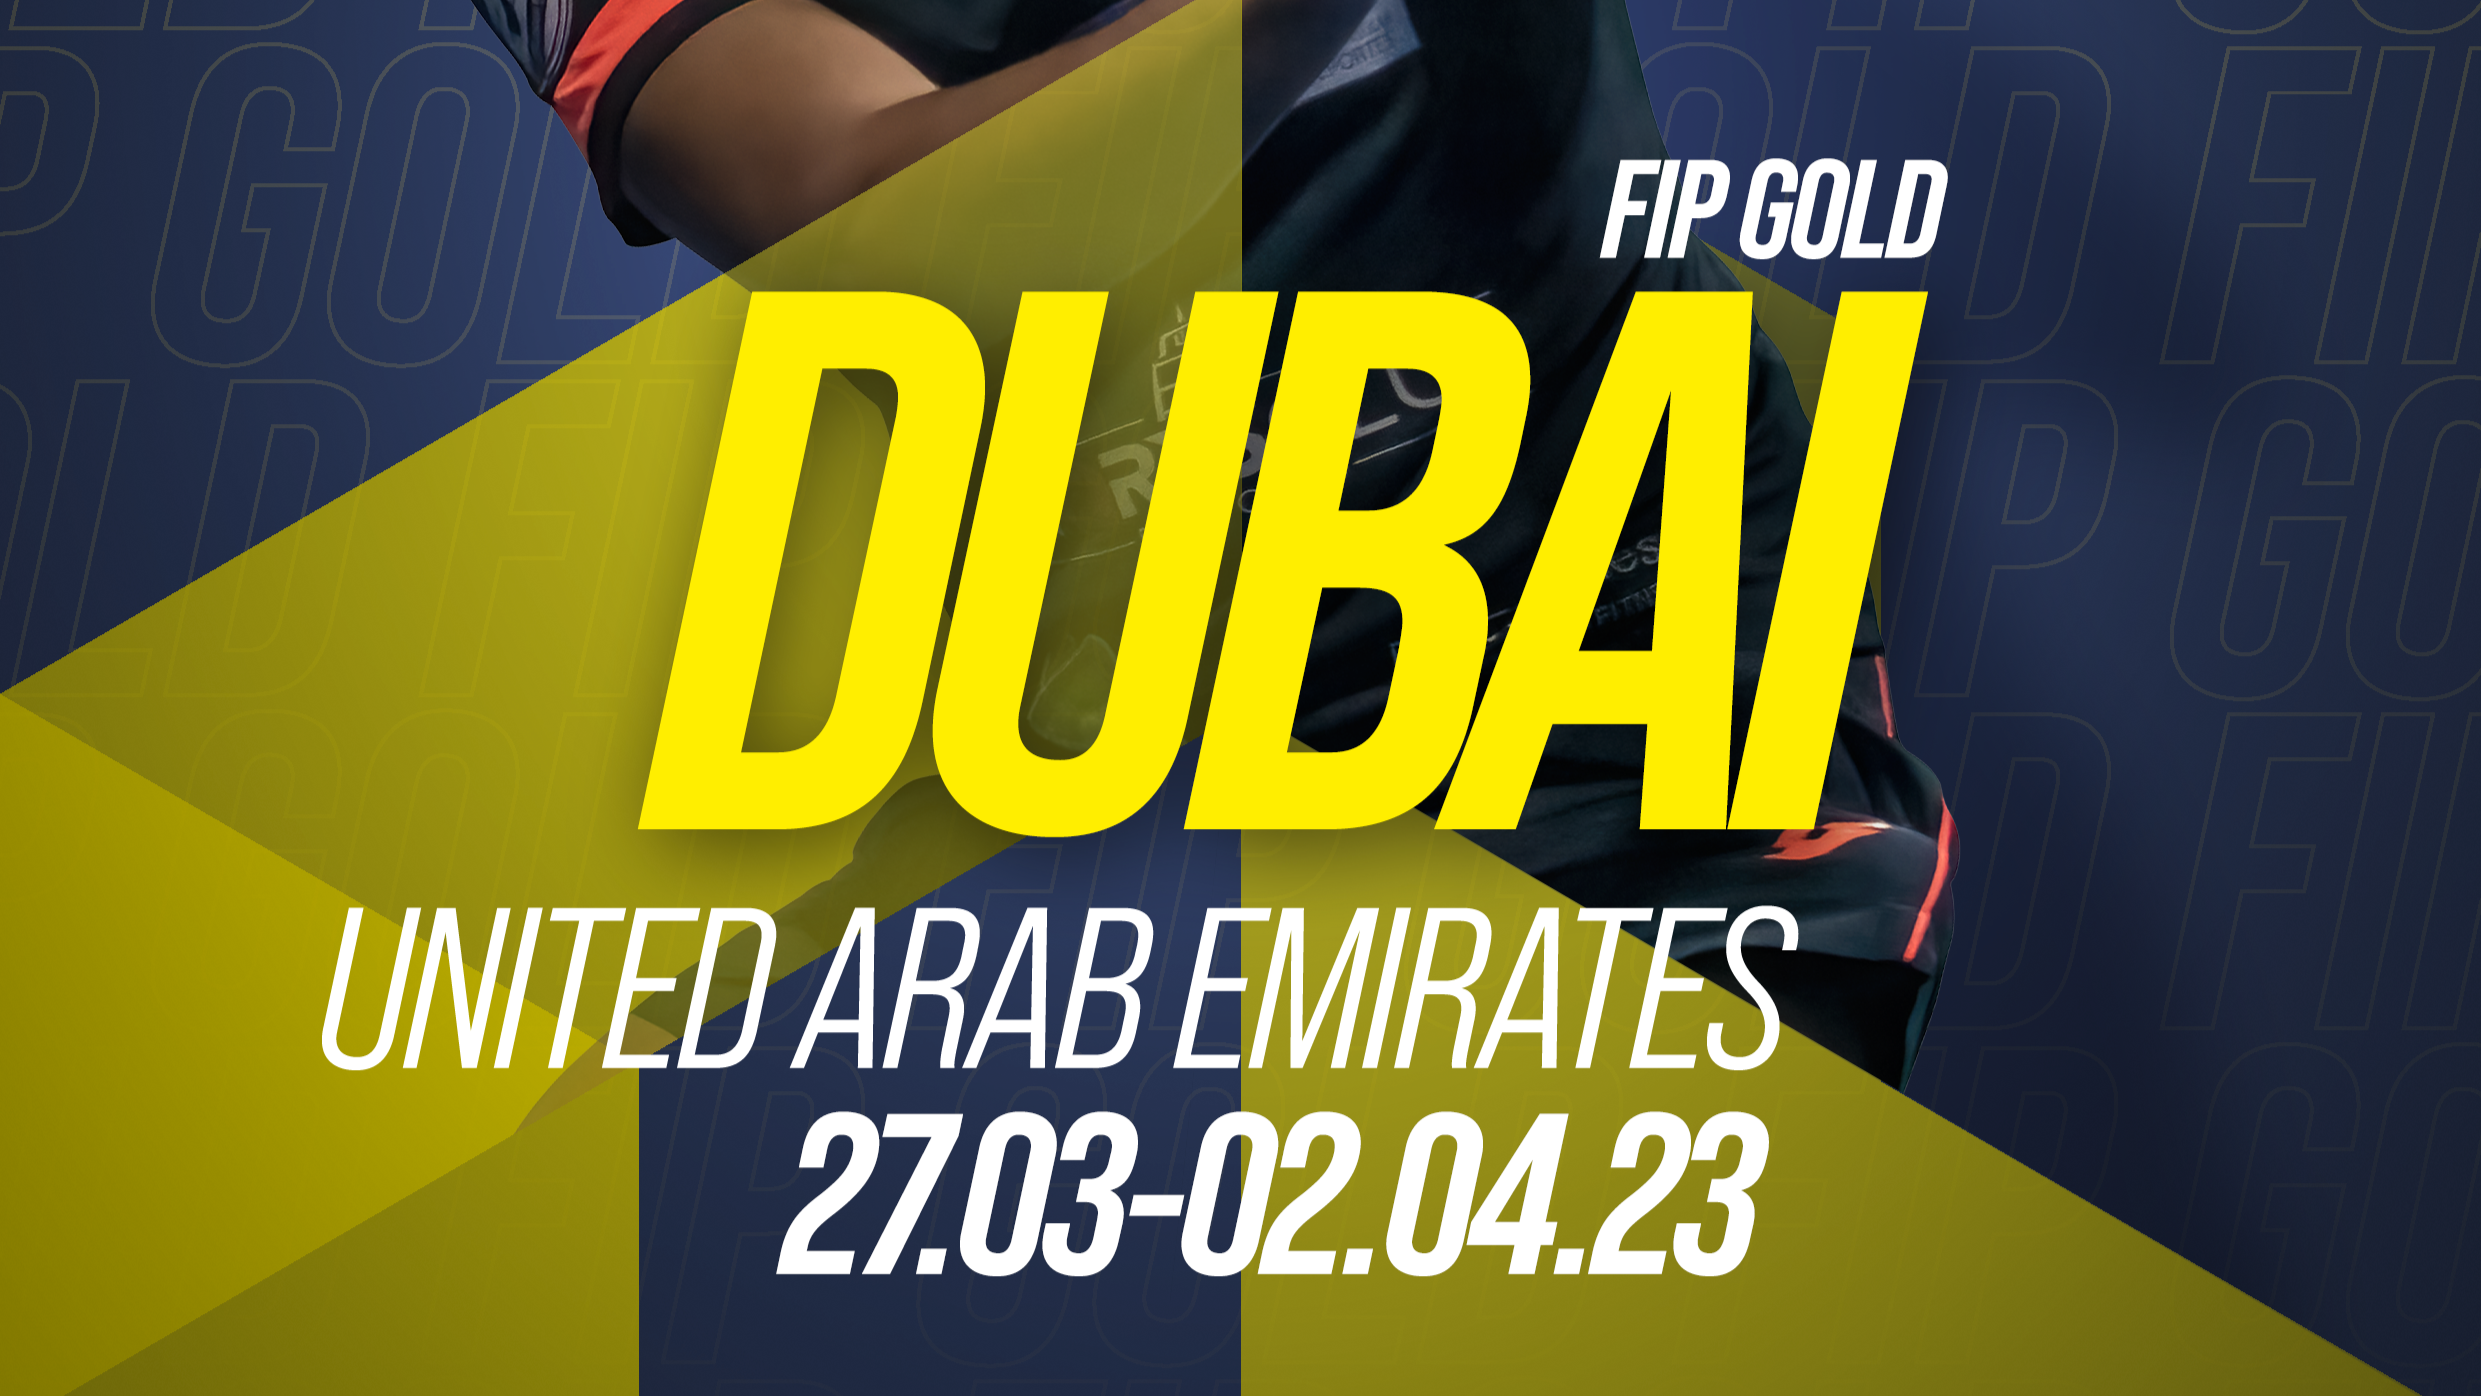 Fip-Guld-Dubai-Plakat